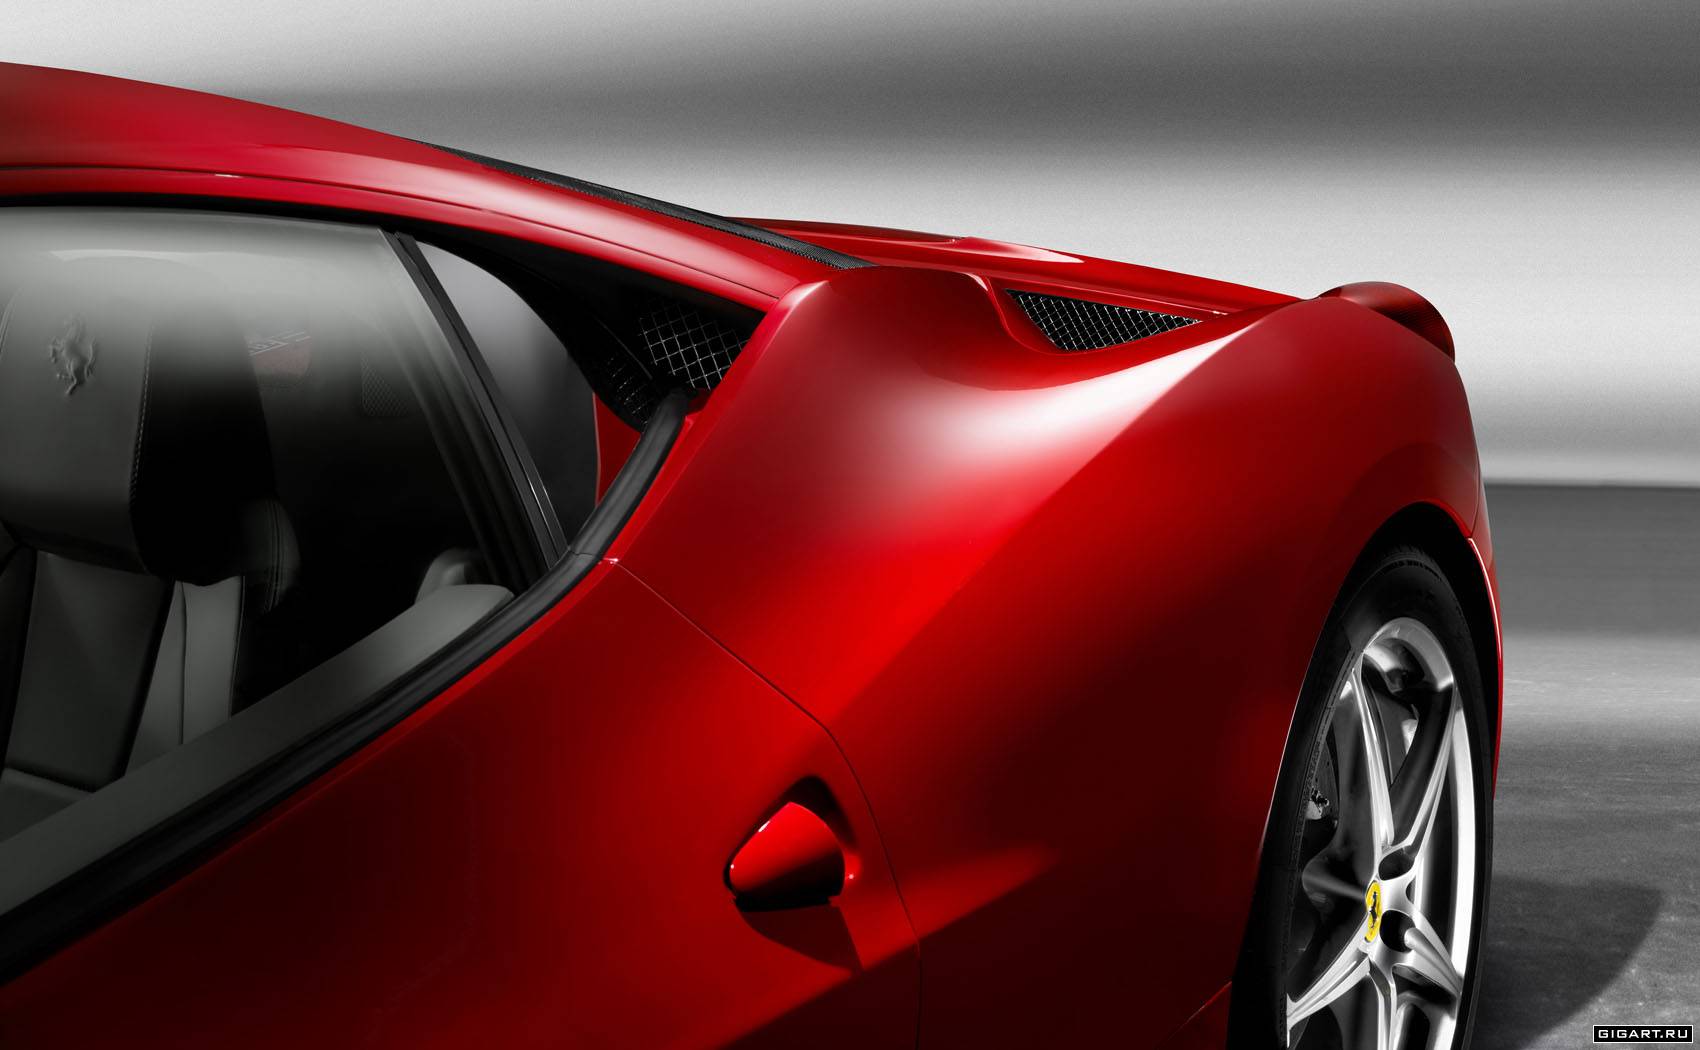  Ferrari, download photo, ferrari, wallpaper